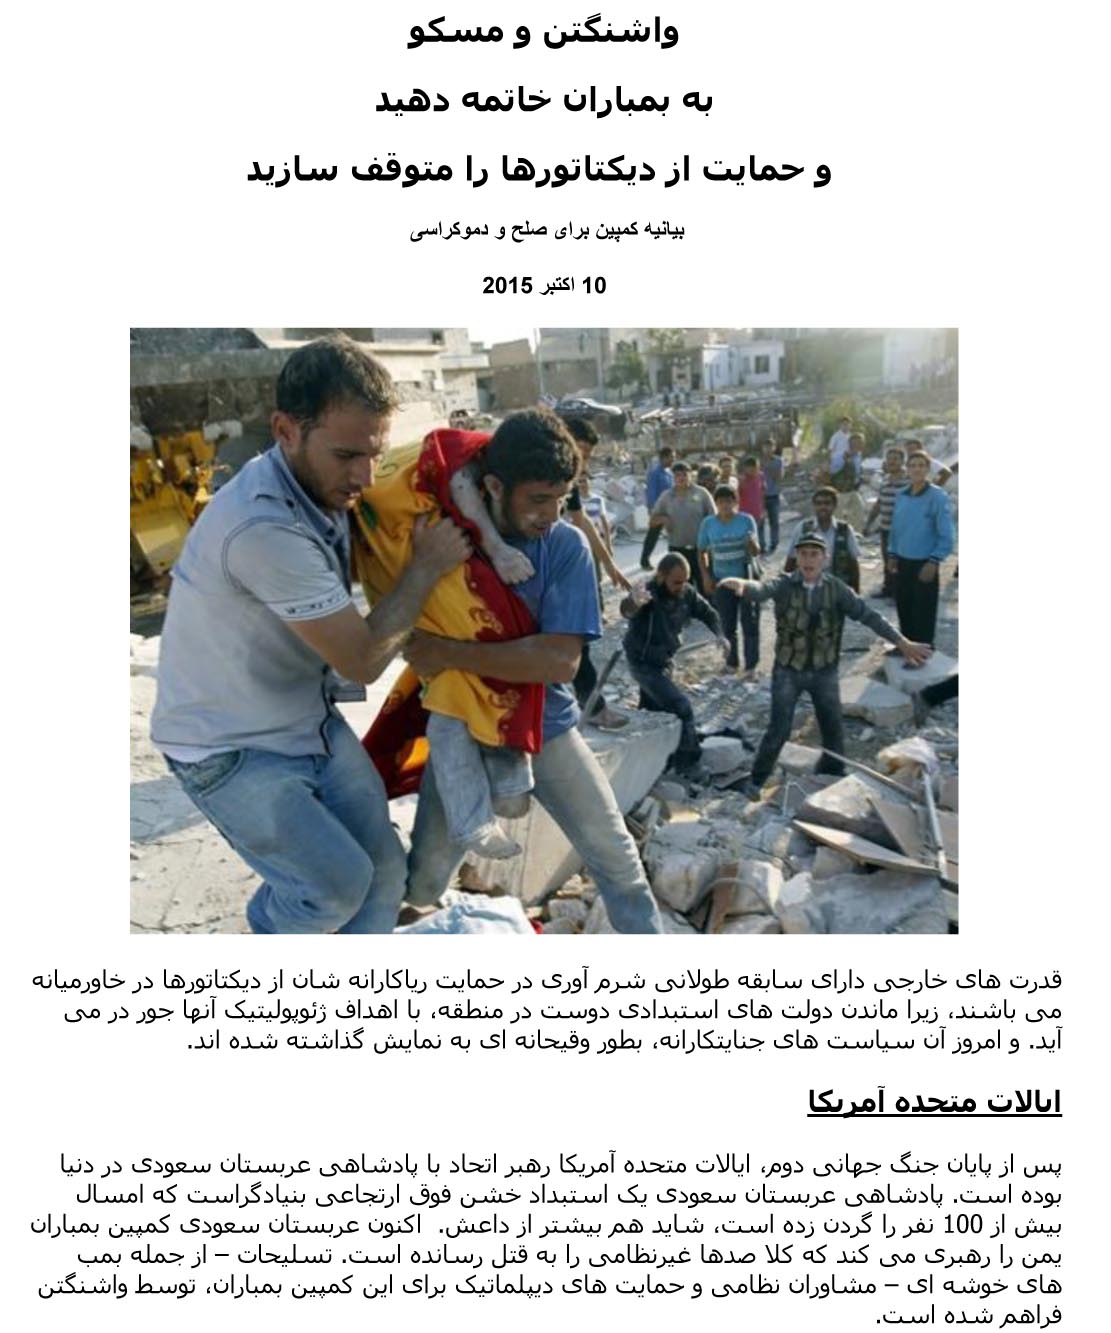 CPD bombing statement in Farsi - part 1